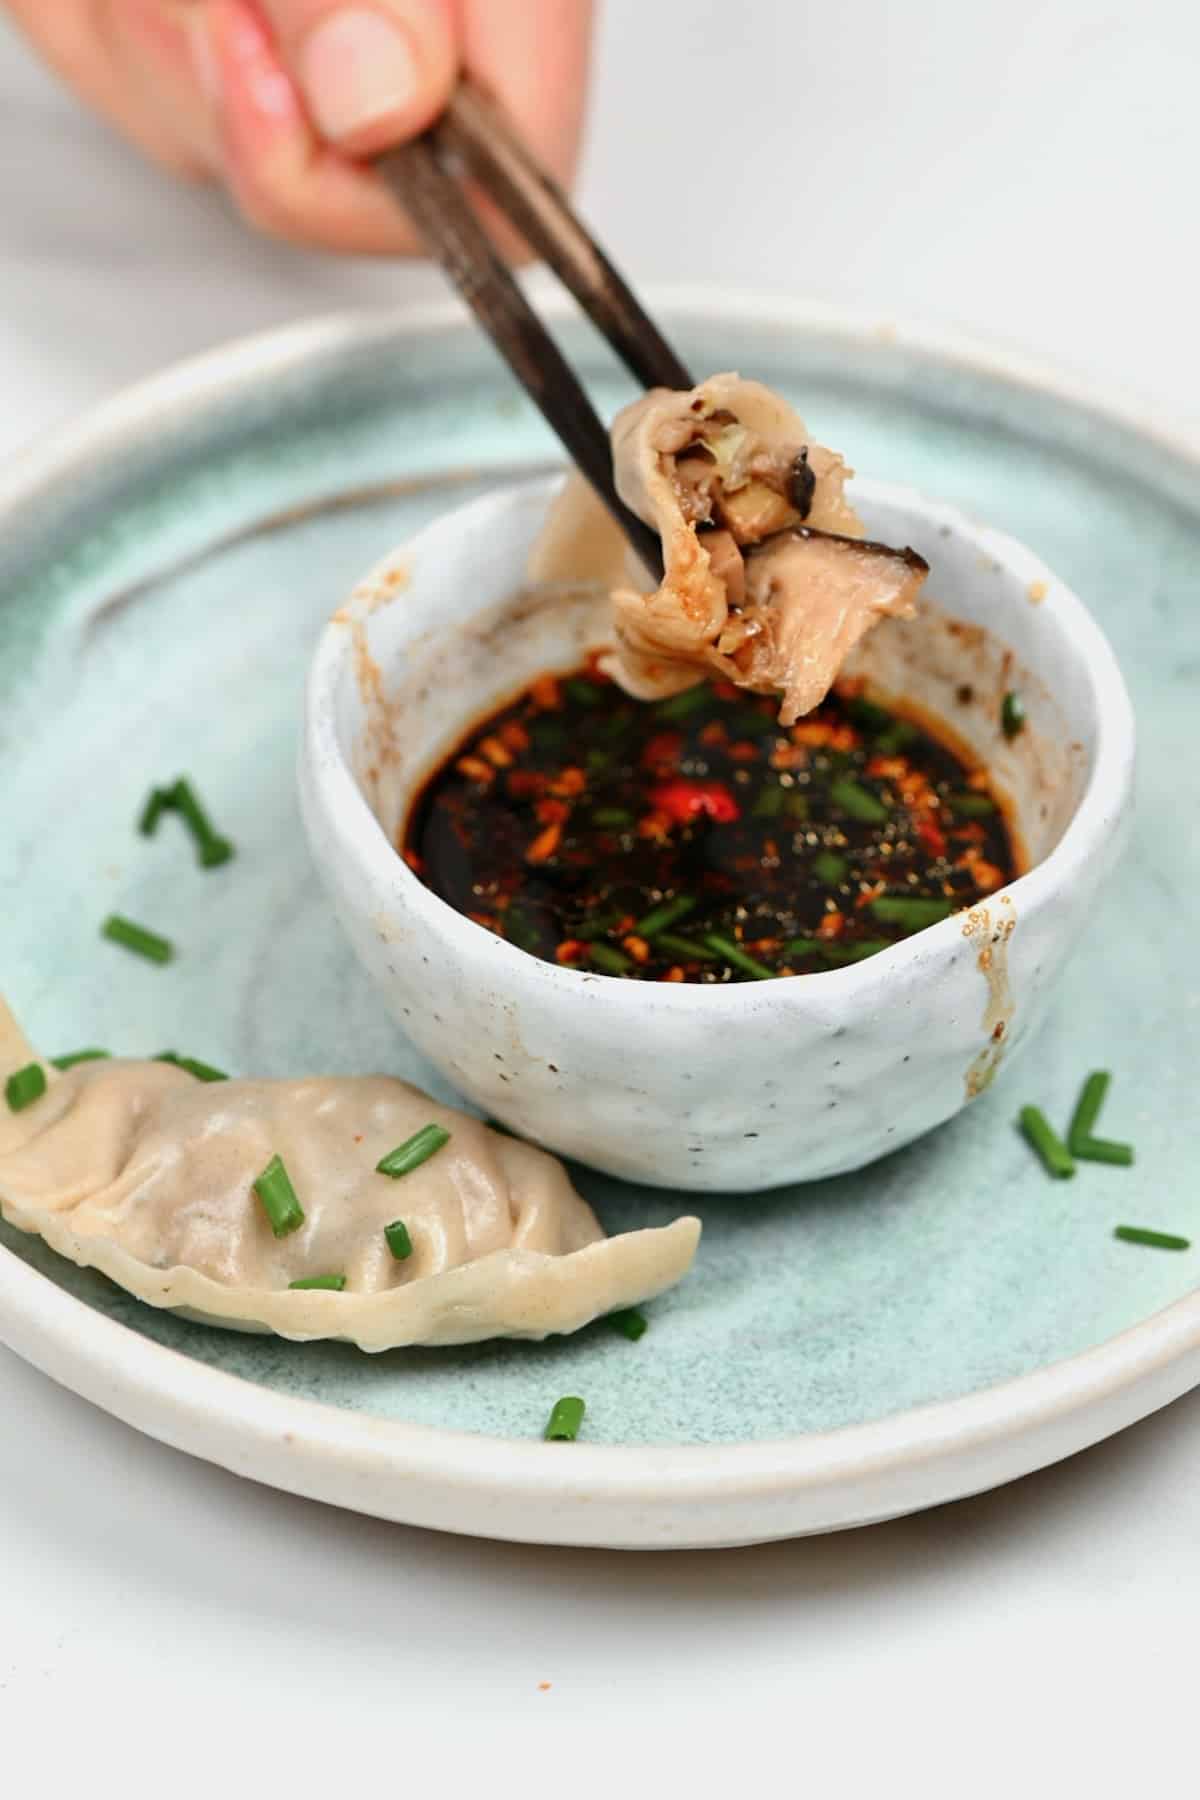 Dipping dumpling in sauce